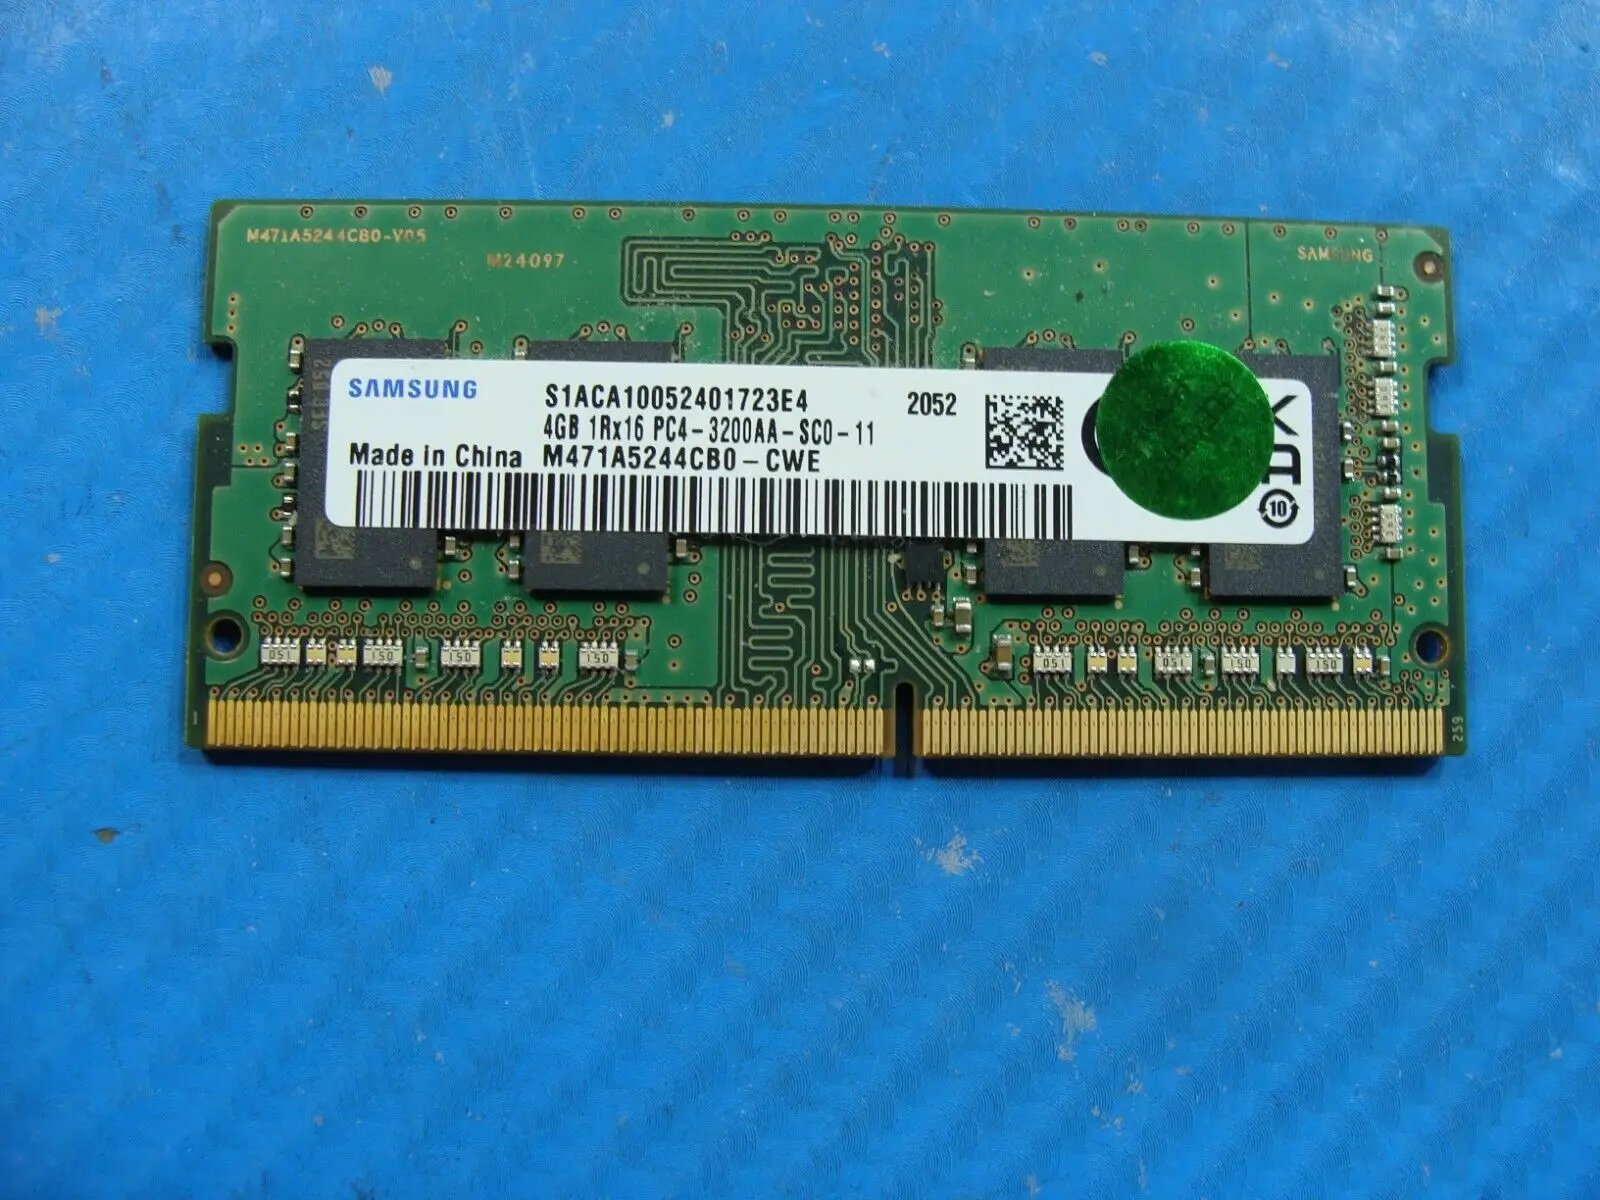 Lenovo 3 17IIL05 Samsung 4GB 1Rx16 PC4-3200AA Memory RAM M471A5244CB0-CWELL